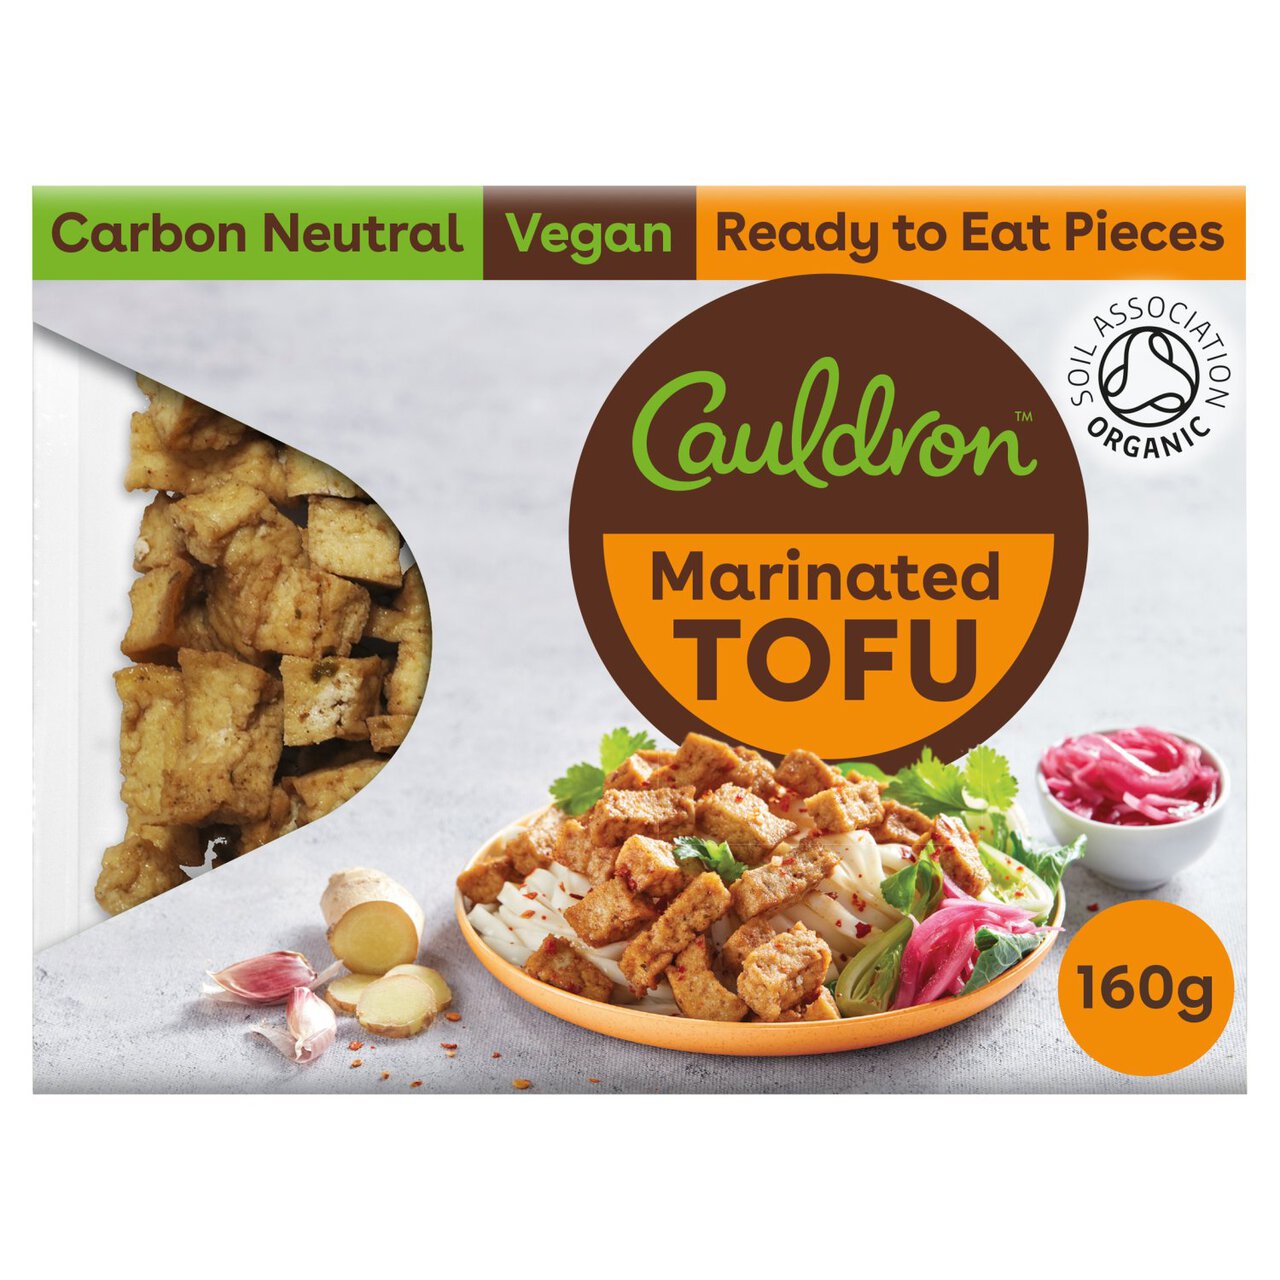 Cauldron Vegan Organic Marinated Tofu Pieces 160g